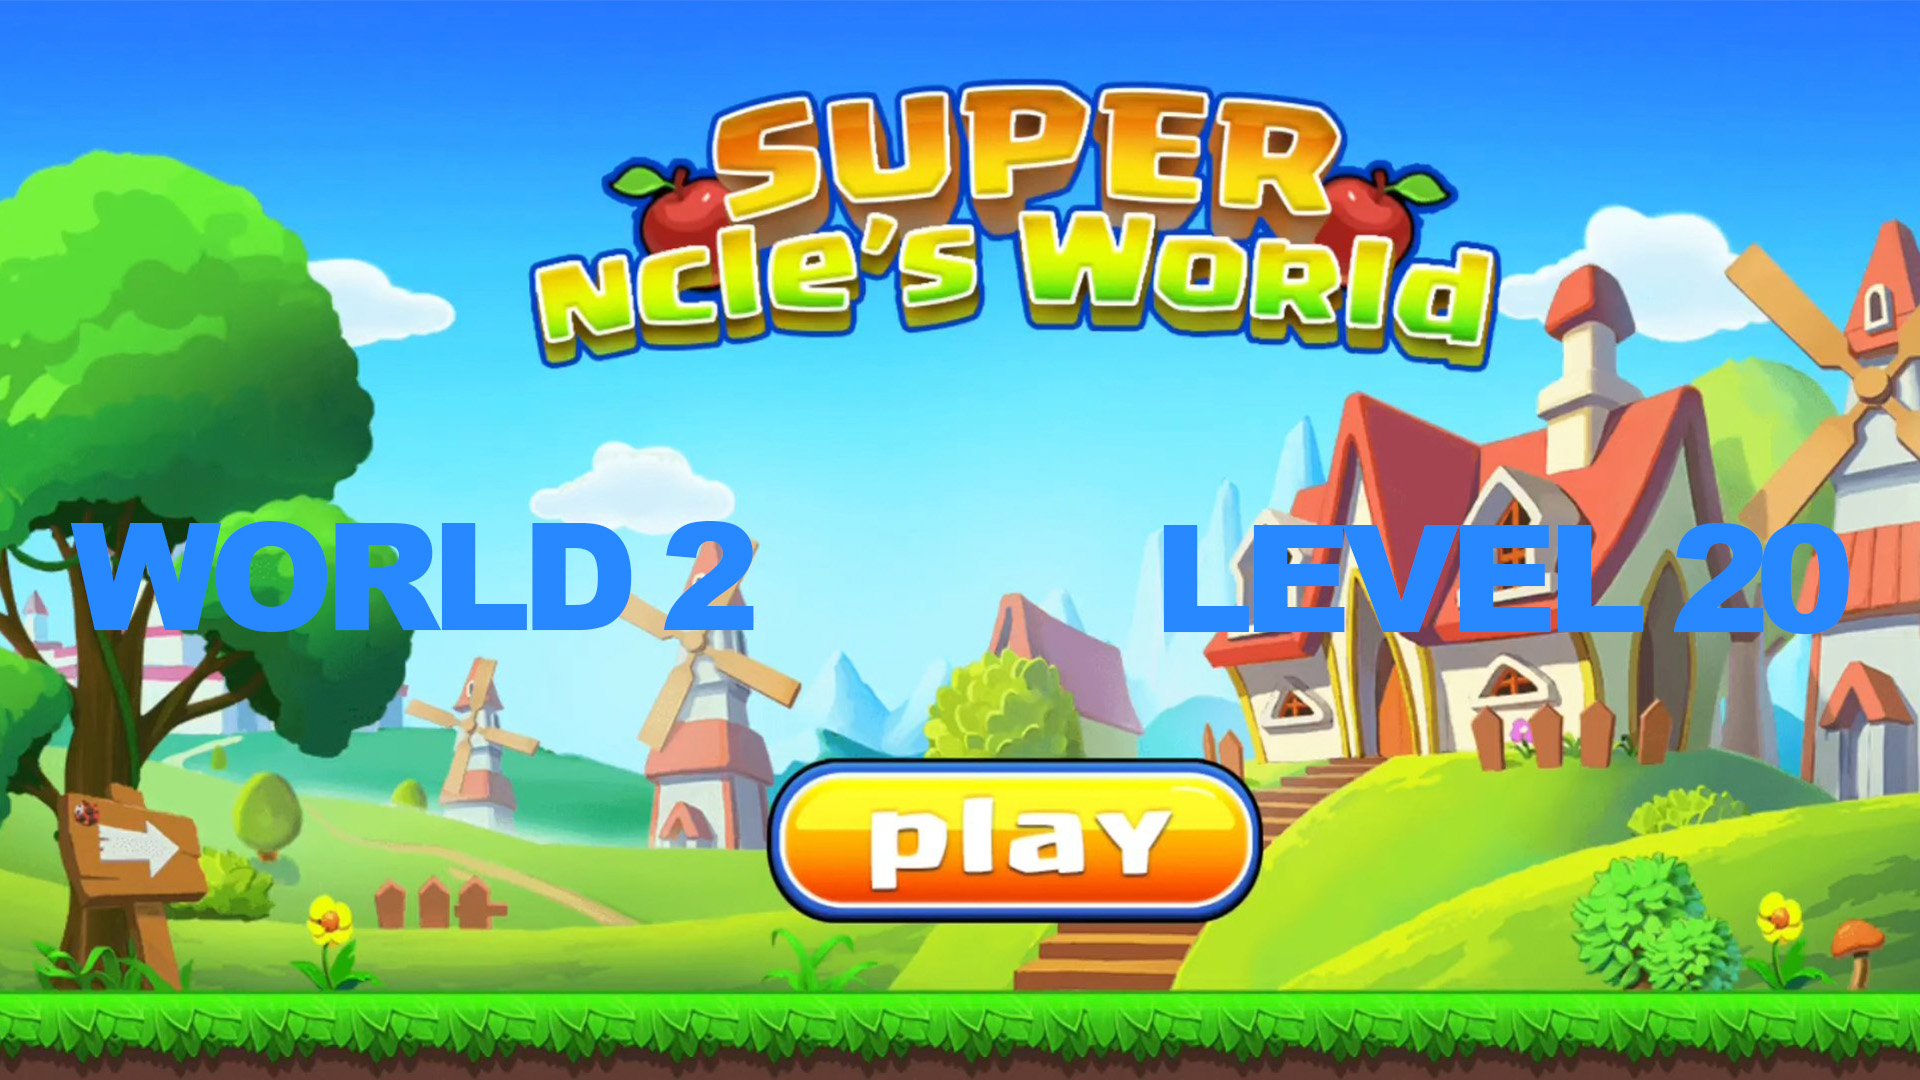 Super ncle's  World 2. level 20.